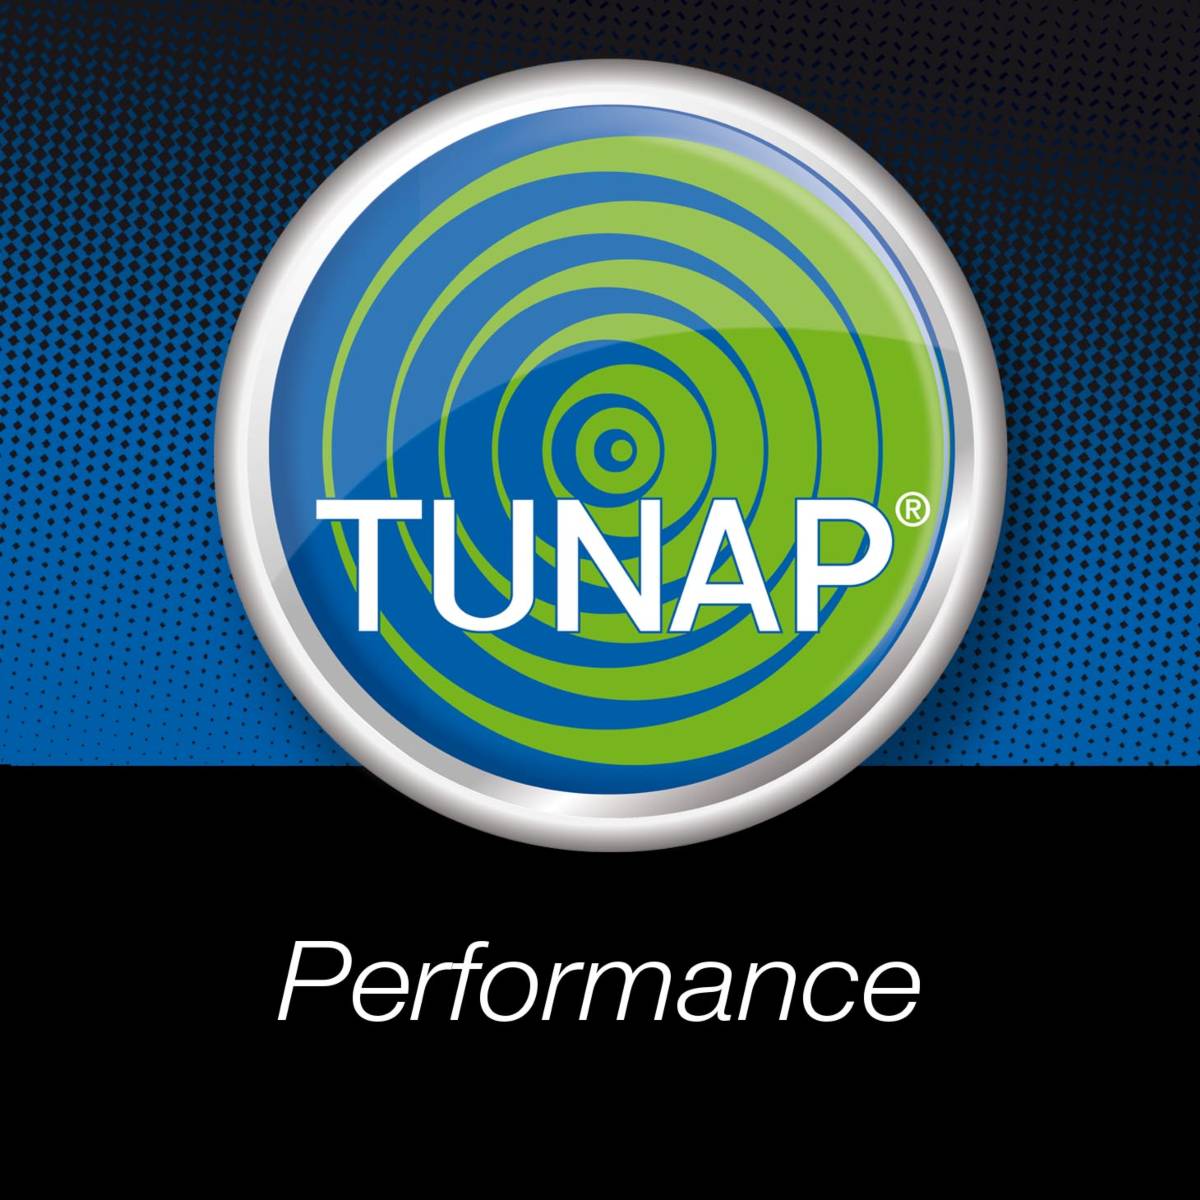 TUNAP Performance Line